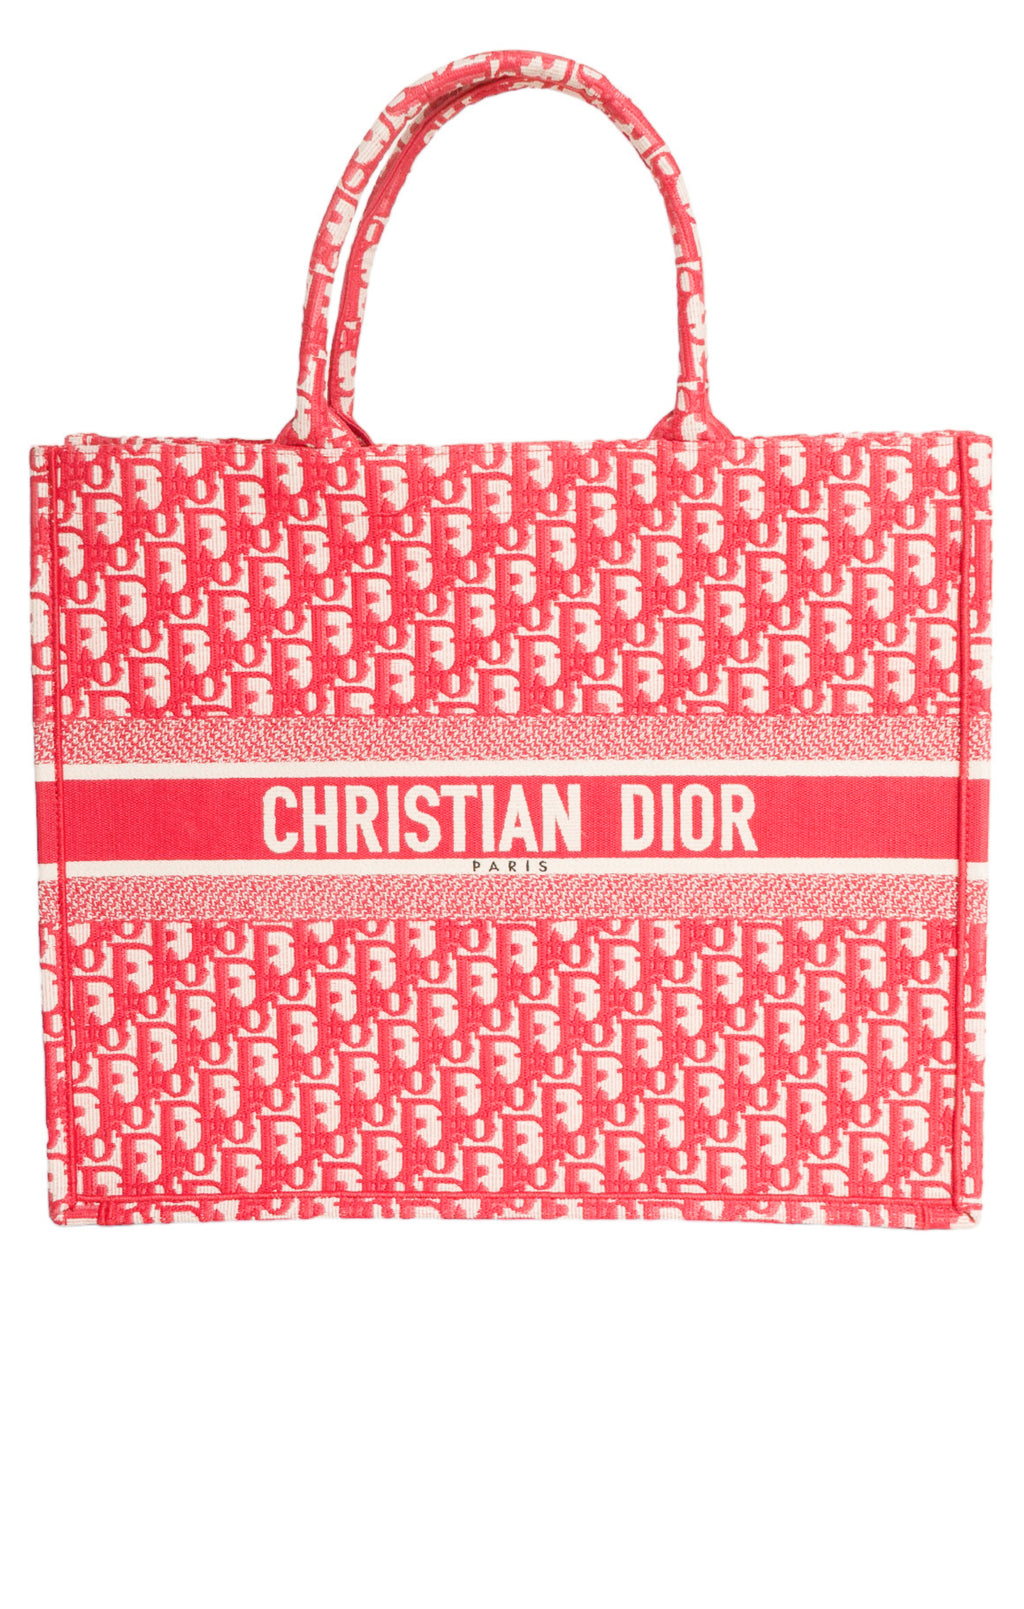 CHRISTIAN DIOR (RARE) Bag Size: 16.375" x 6.5" x 14.75"; 6" drop handle